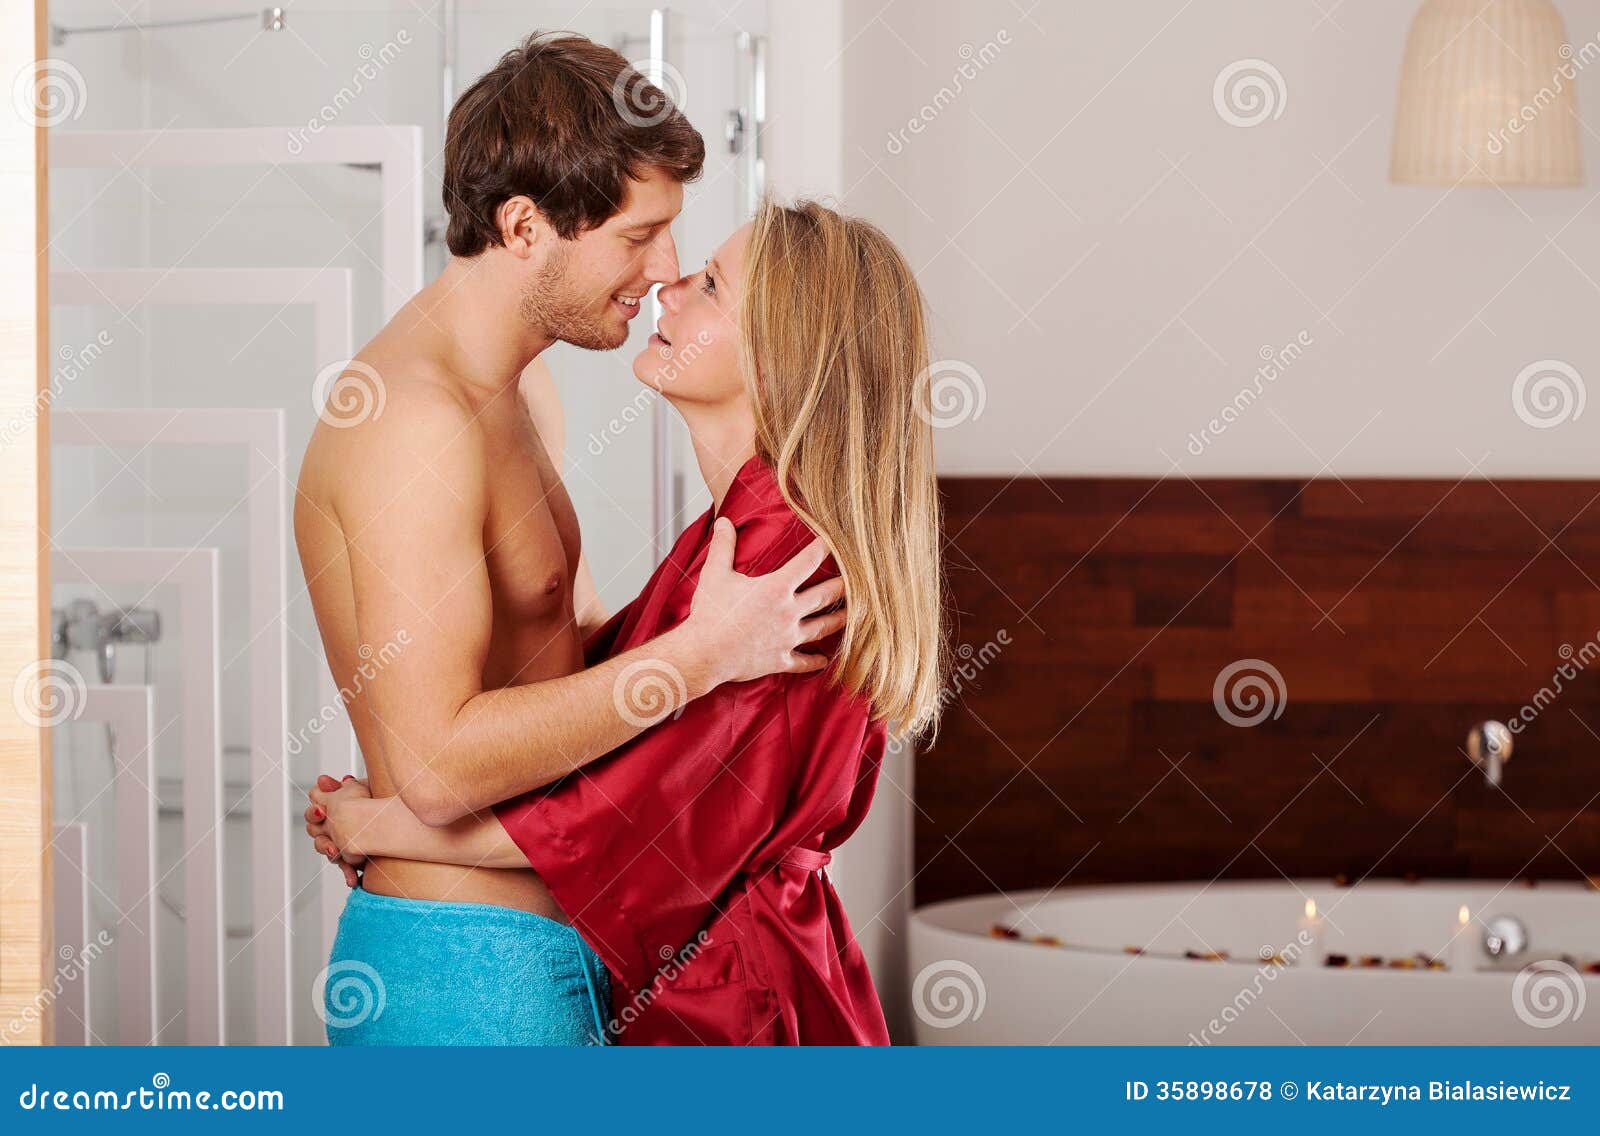 husband wife sex in bath